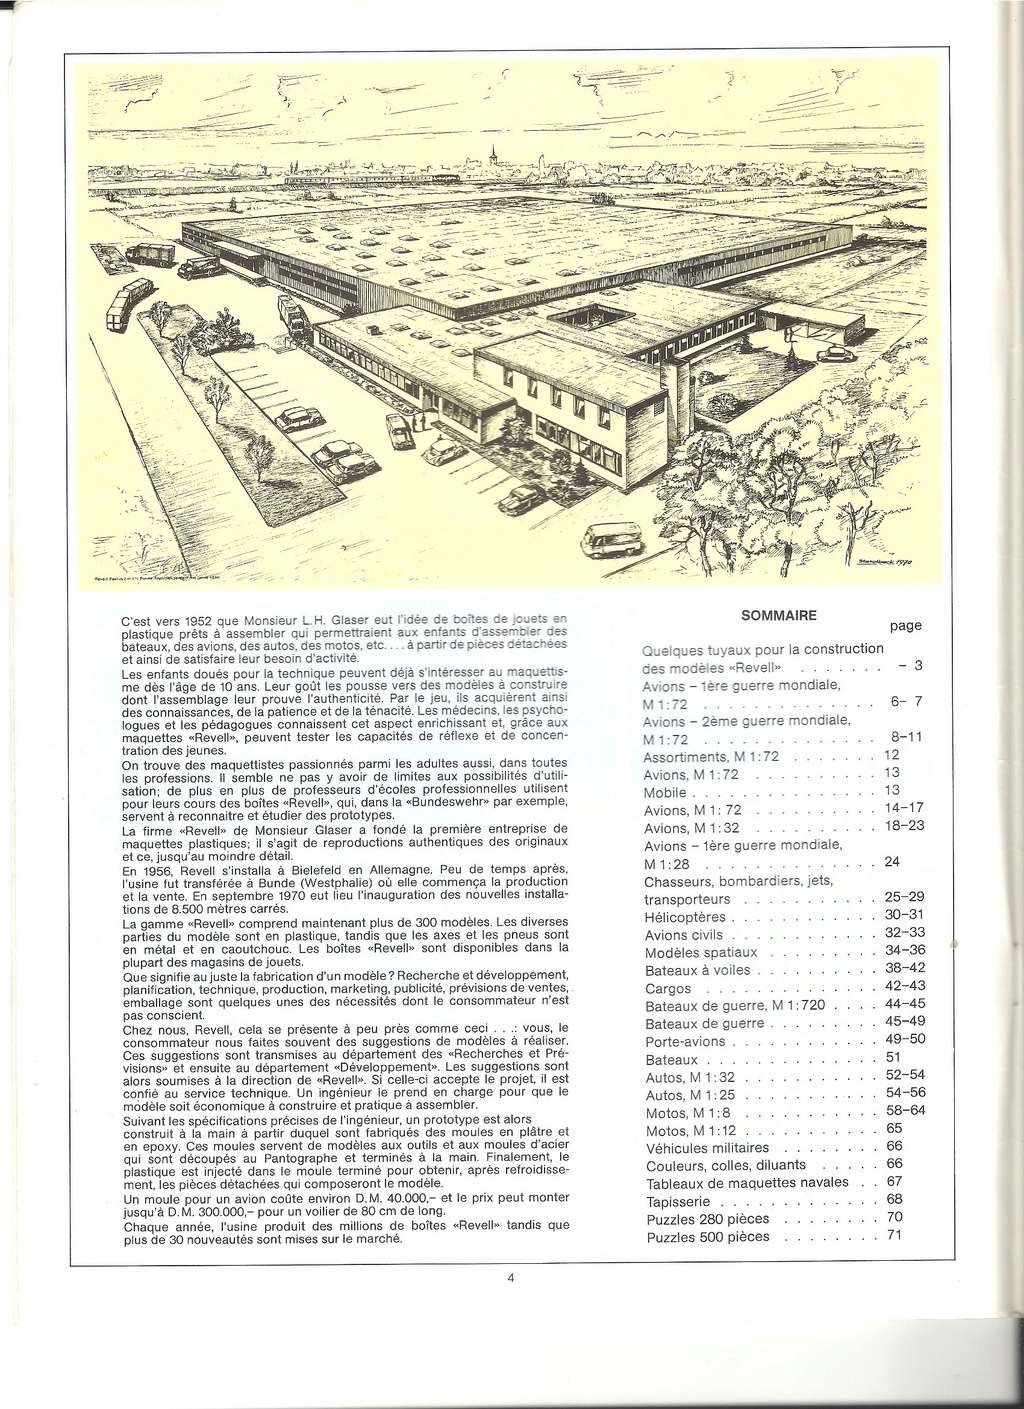 [REVELL 1972] Catalogue 1972  Revel579